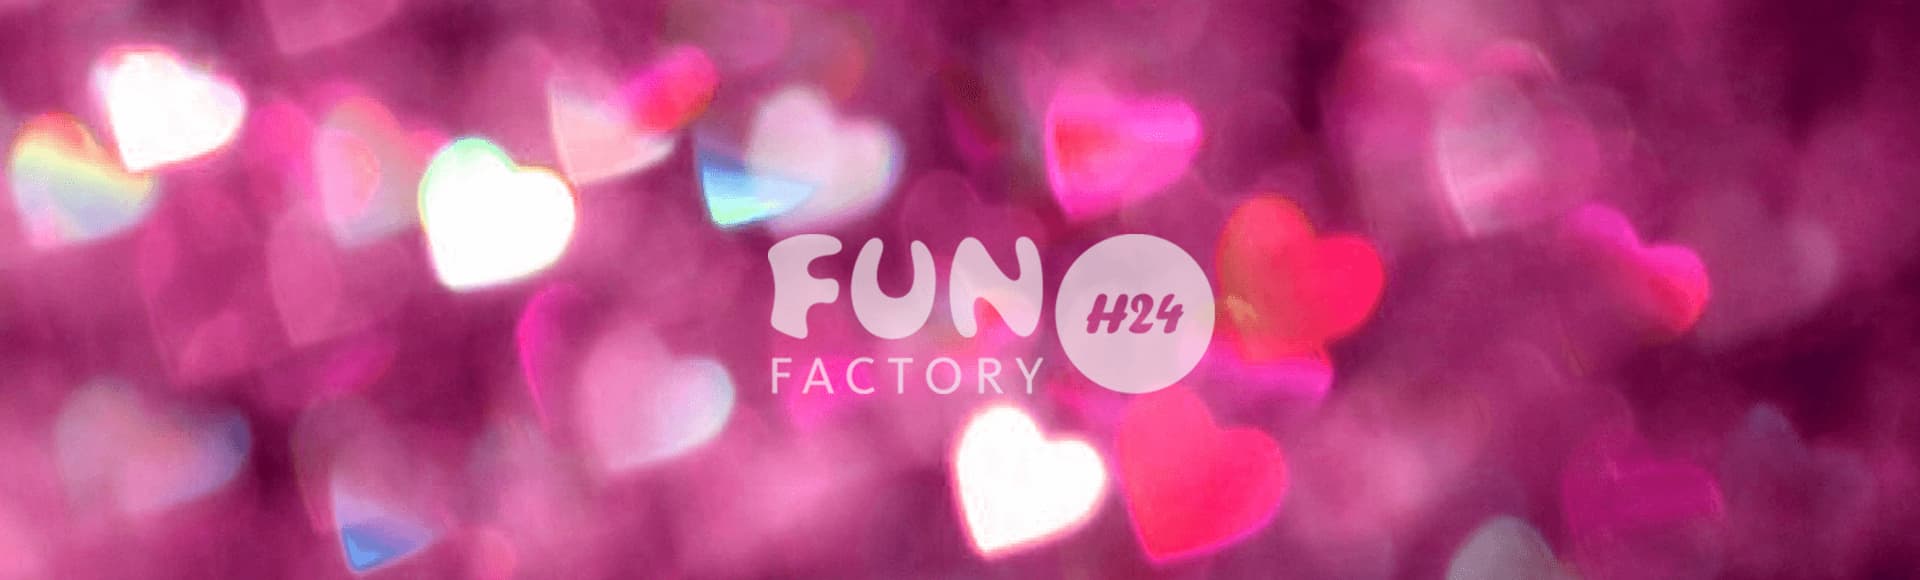 Fun Factory H24